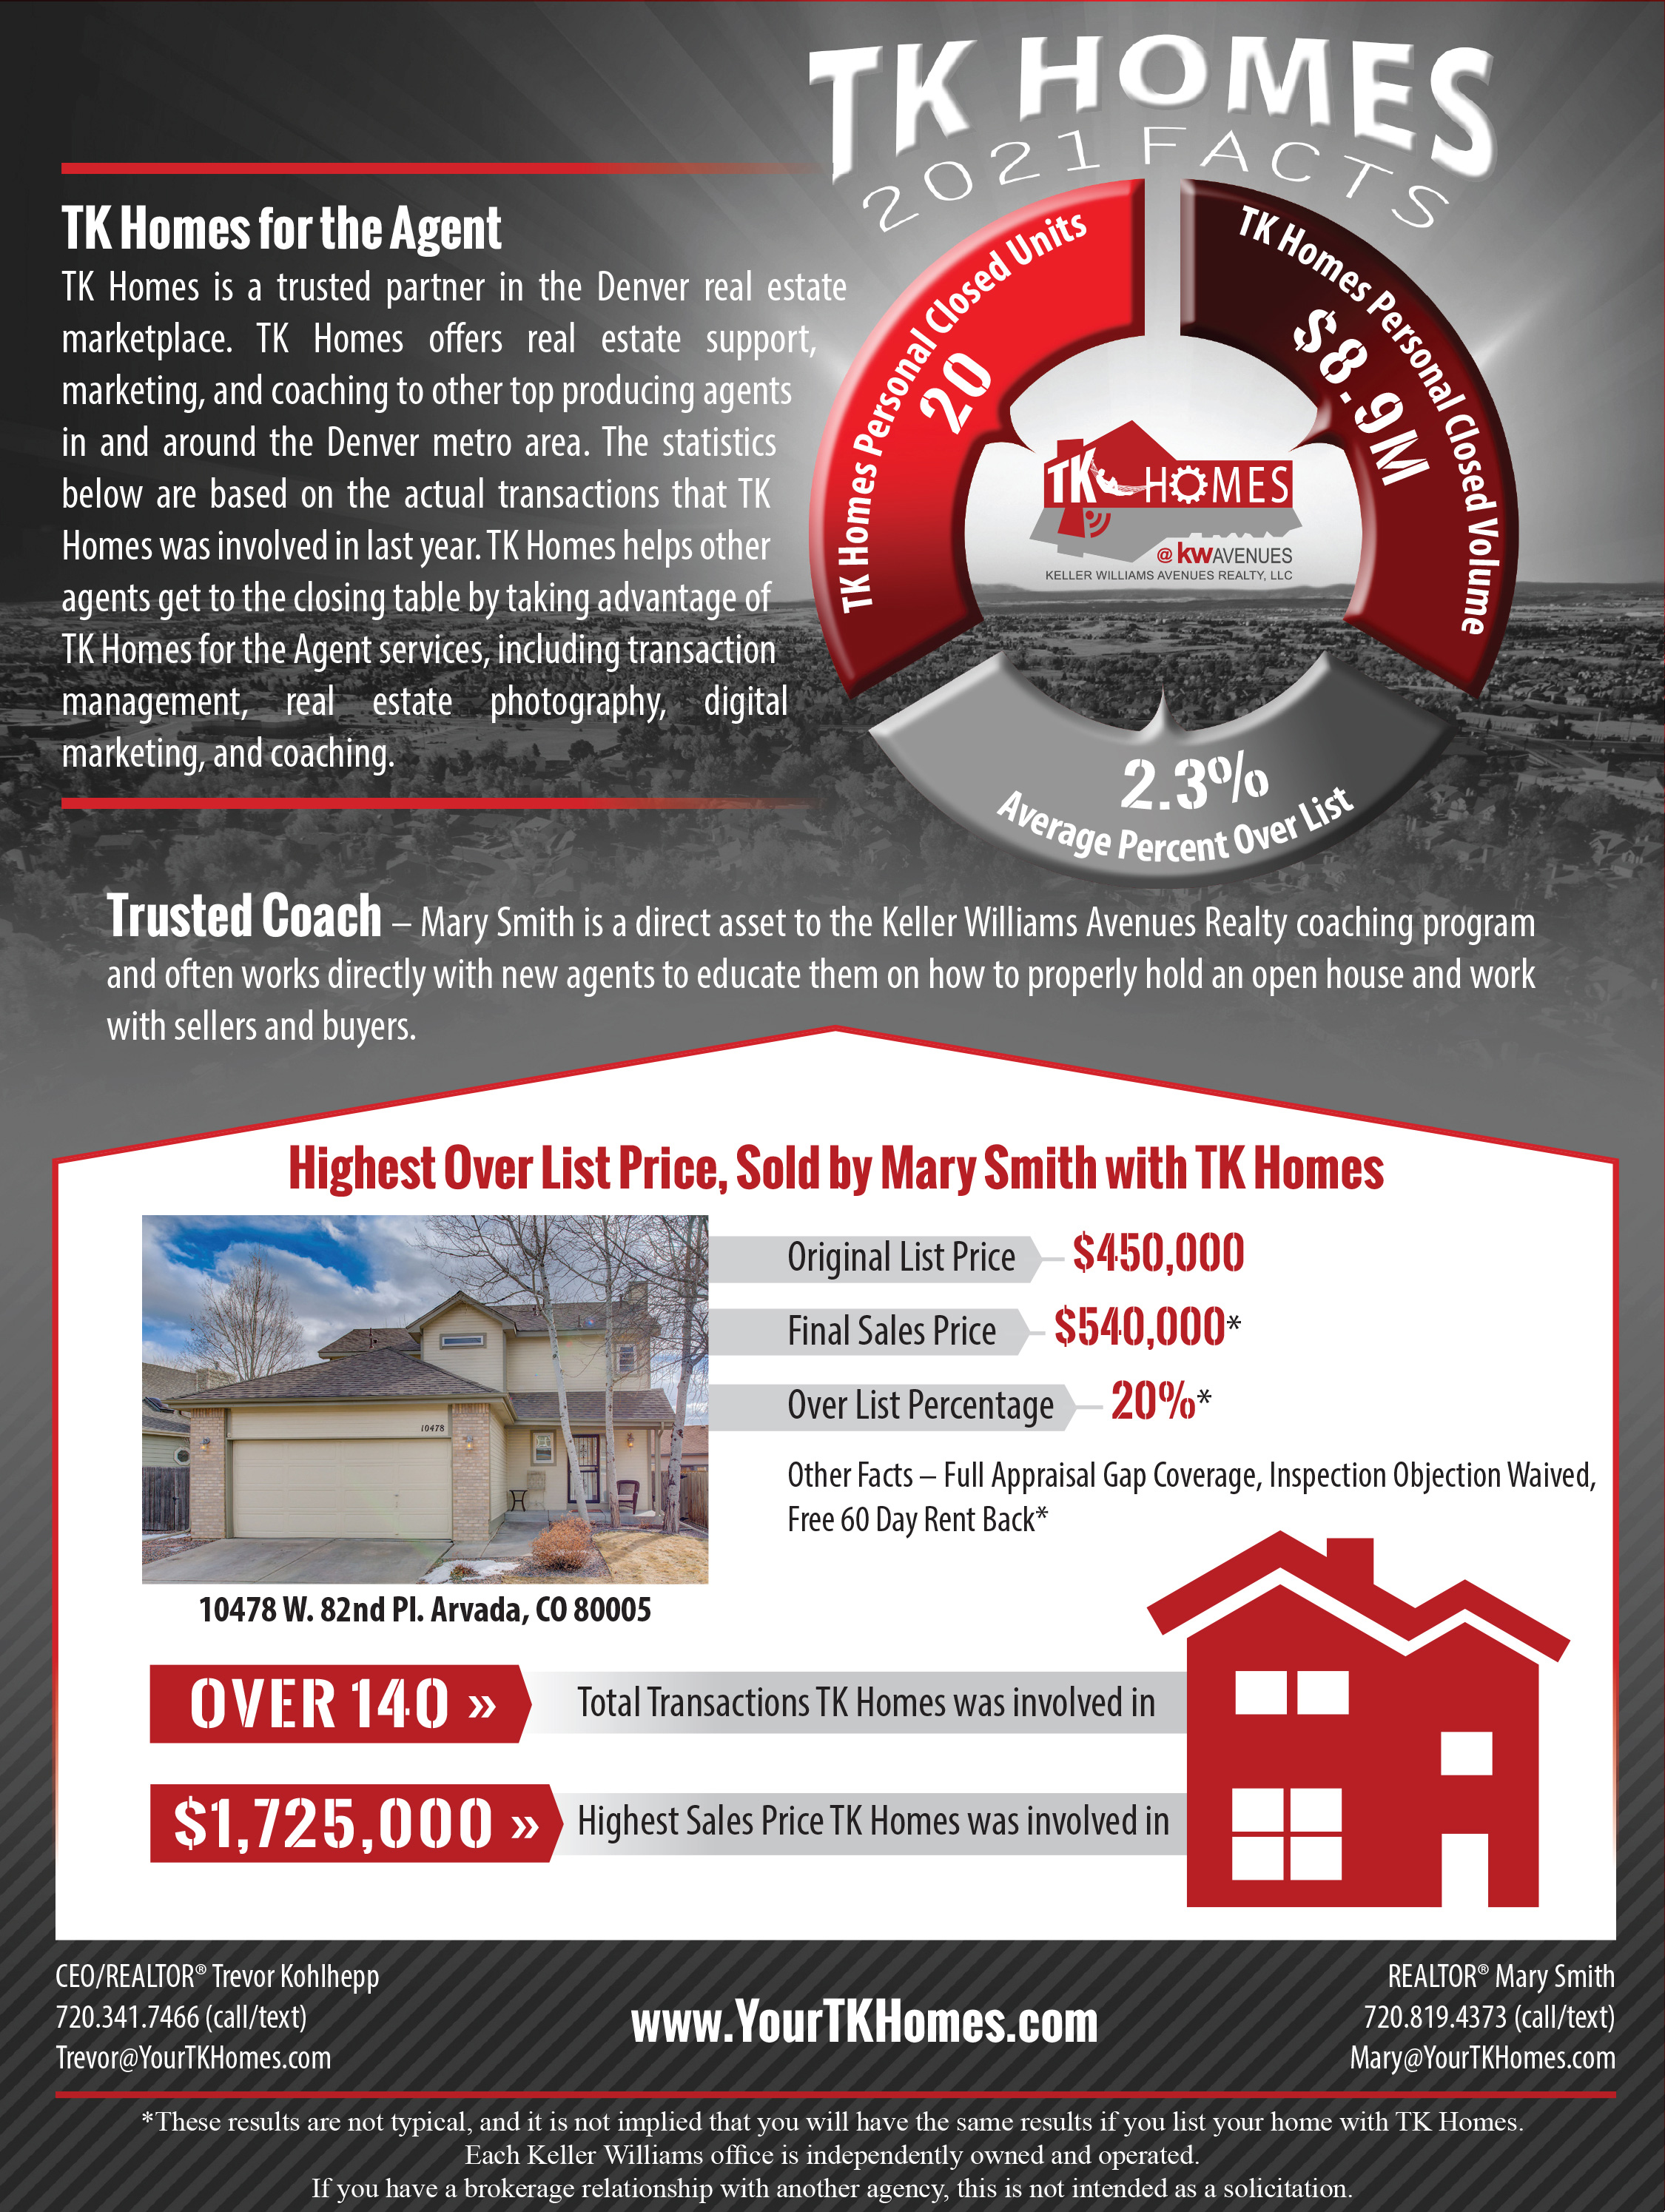 TK-Homes_2021-Fact-Sheet.jpg